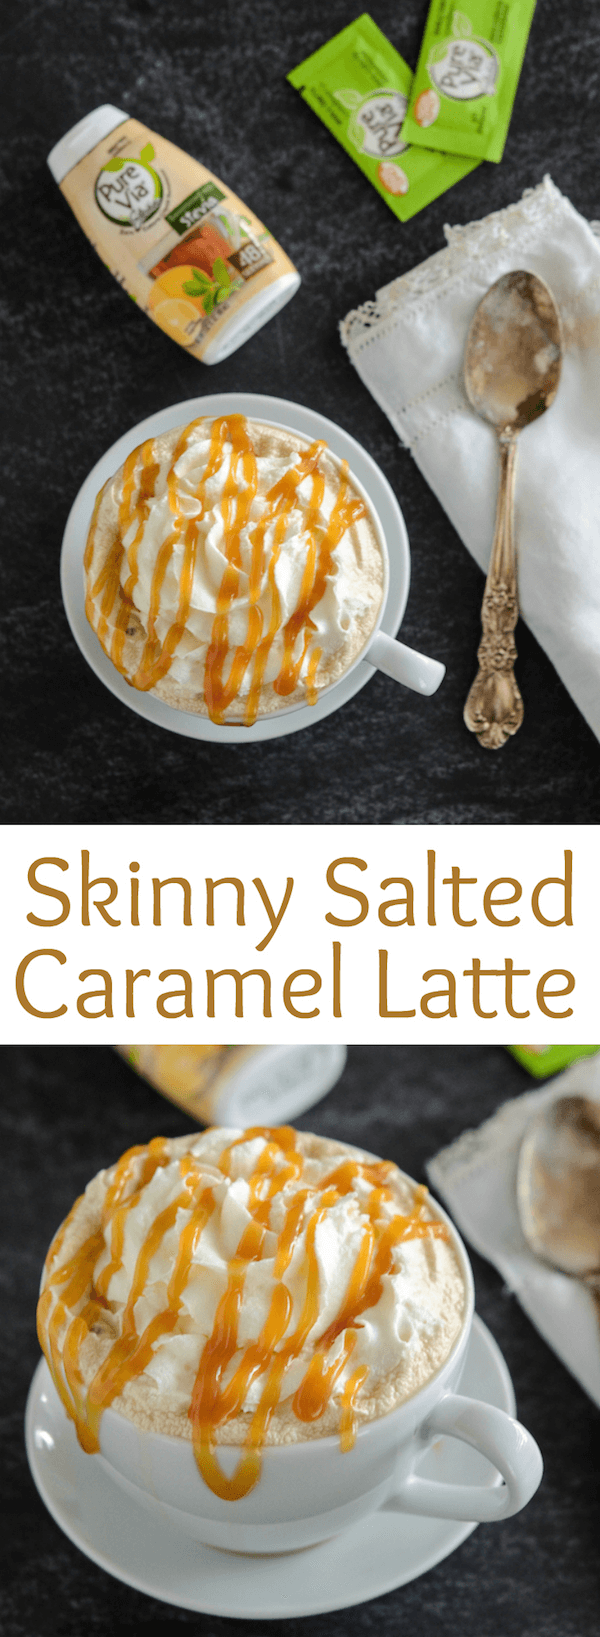 Skinny Salted Caramel Latte | The Novice Chef